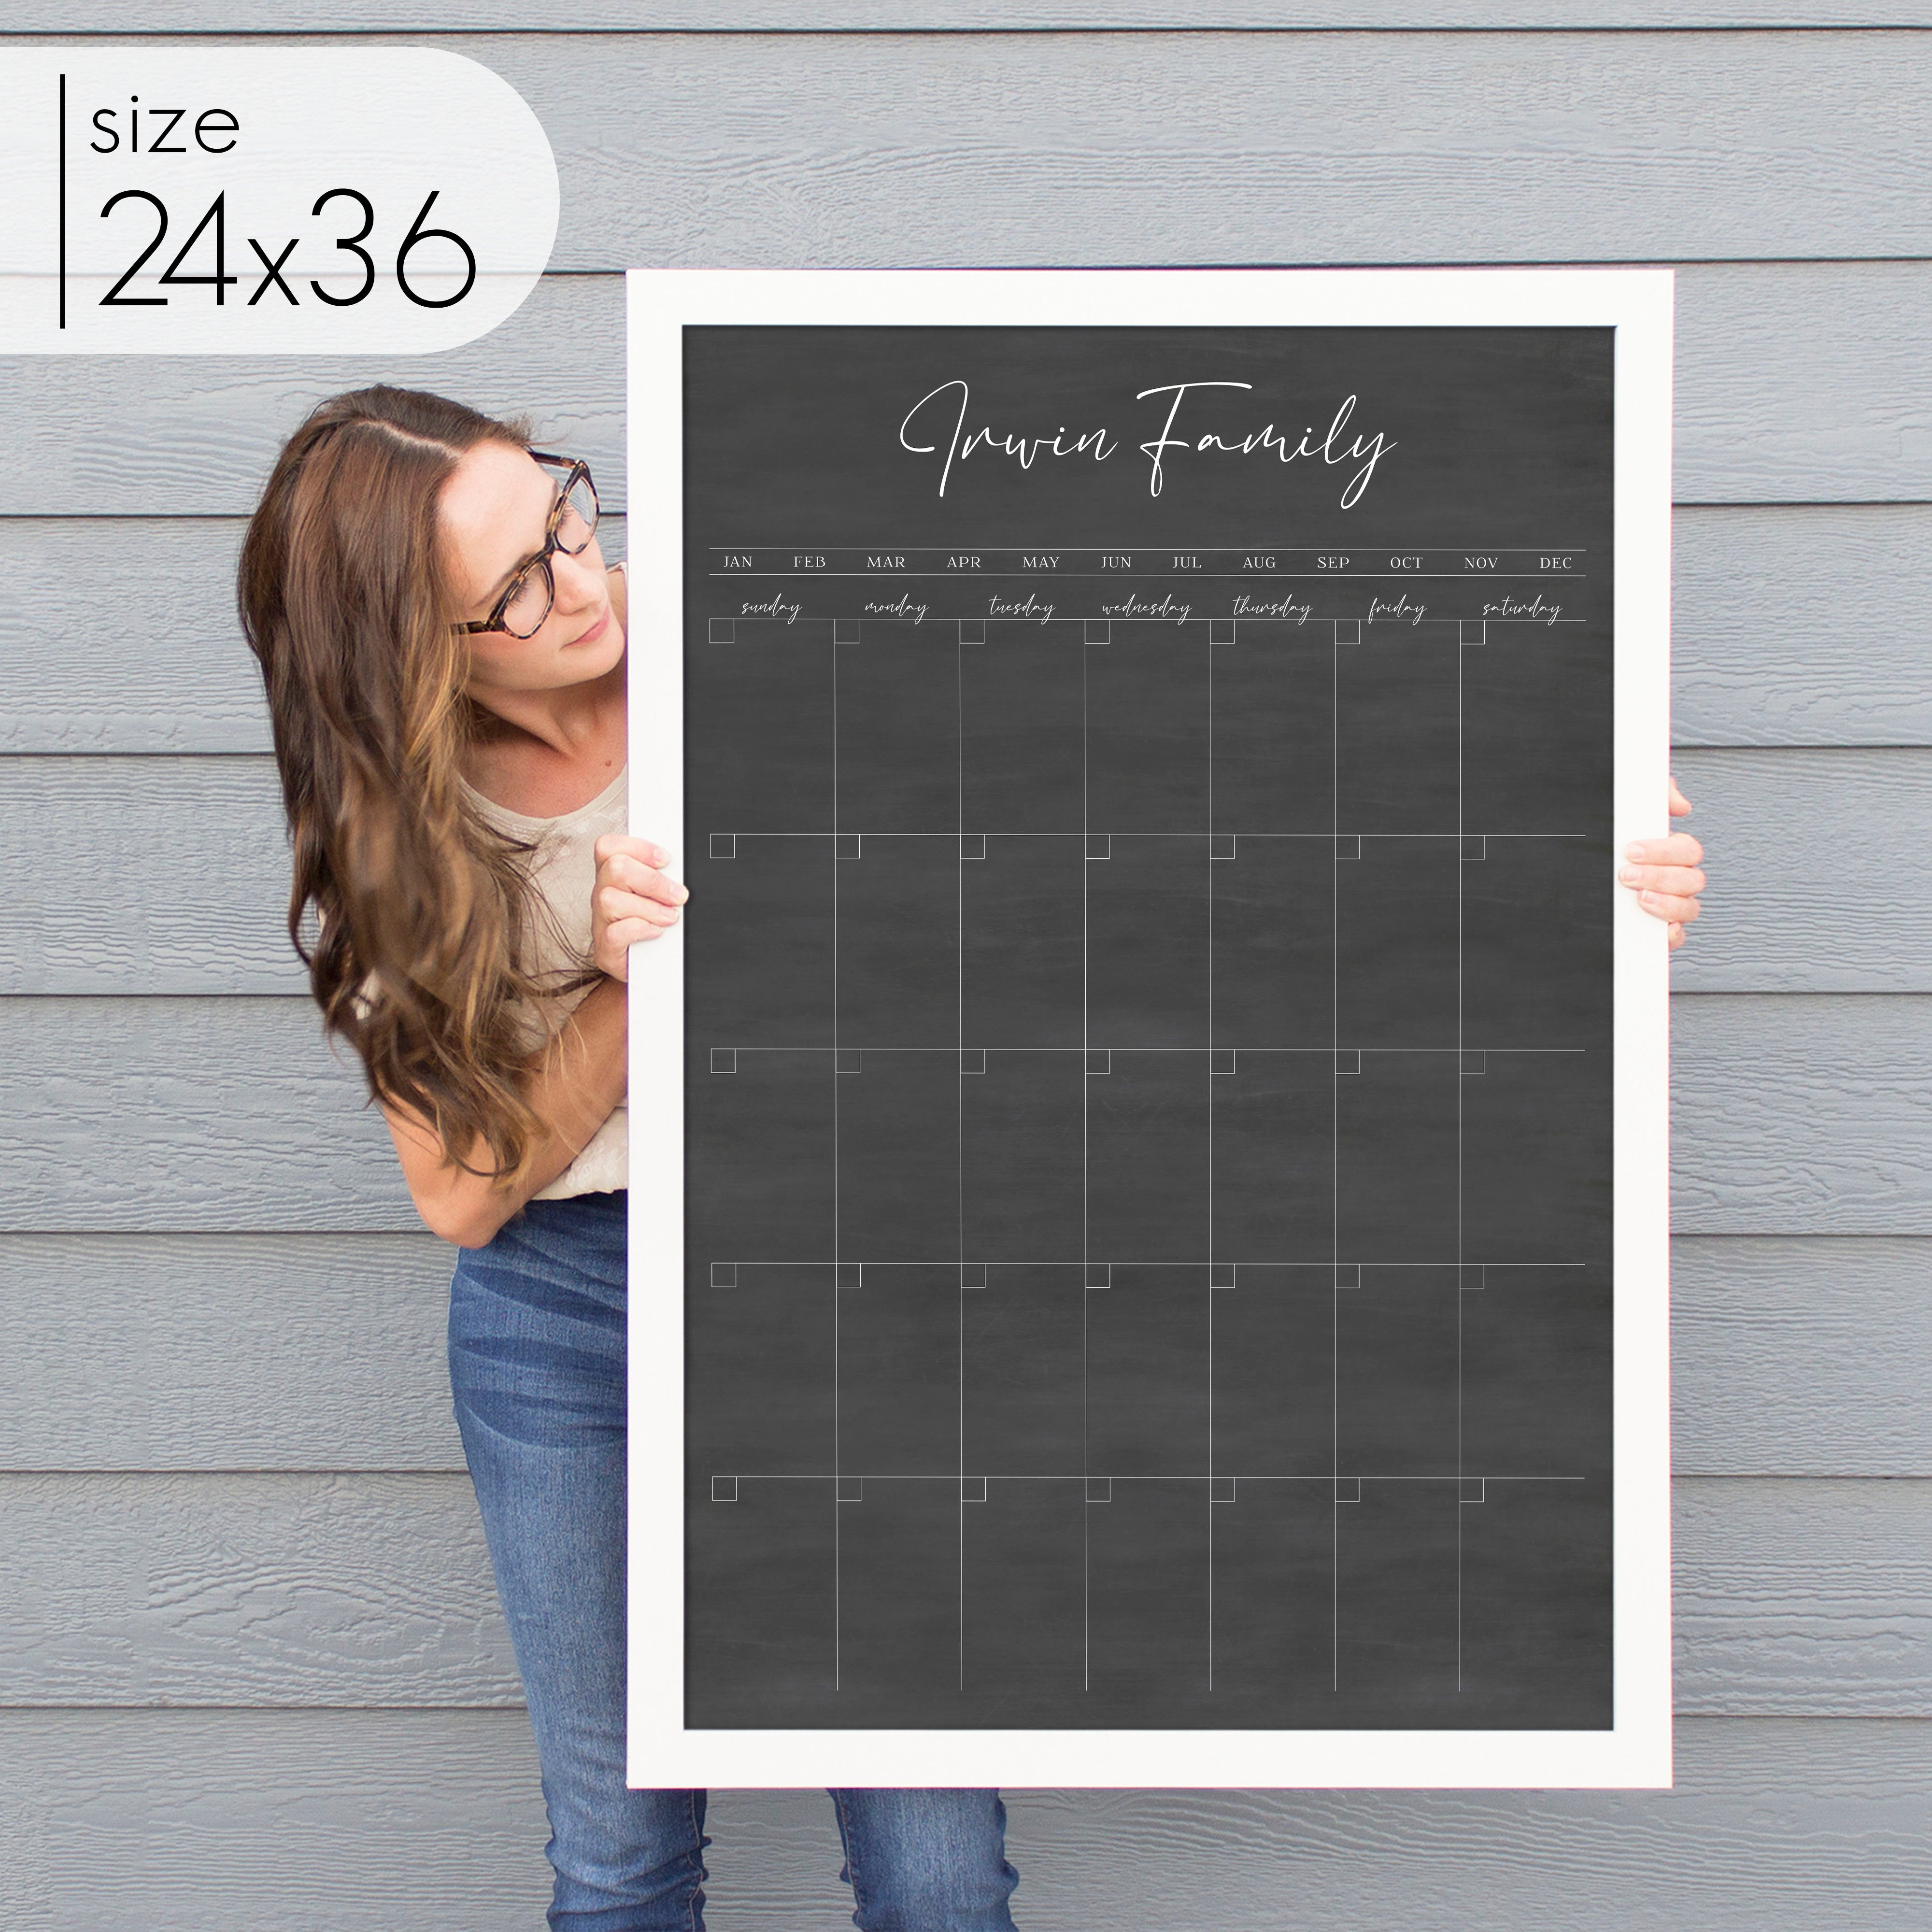 Monthly Framed Chalkboard Calendar | Vertical Pennington